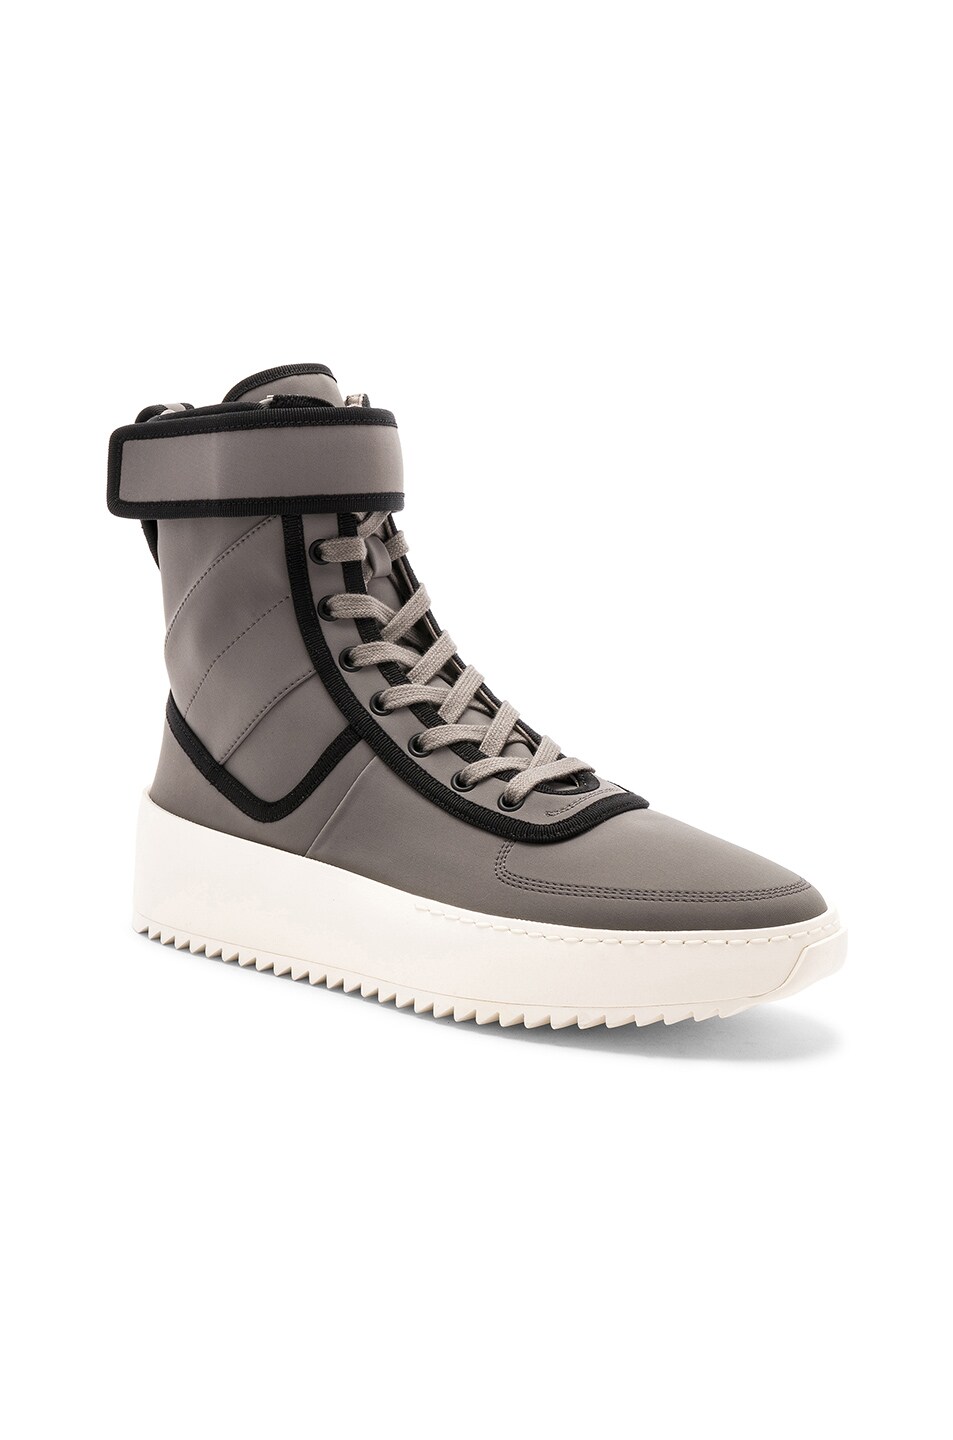 Image 1 of Fear of God Neoprene Military Sneakers in Grey & Black